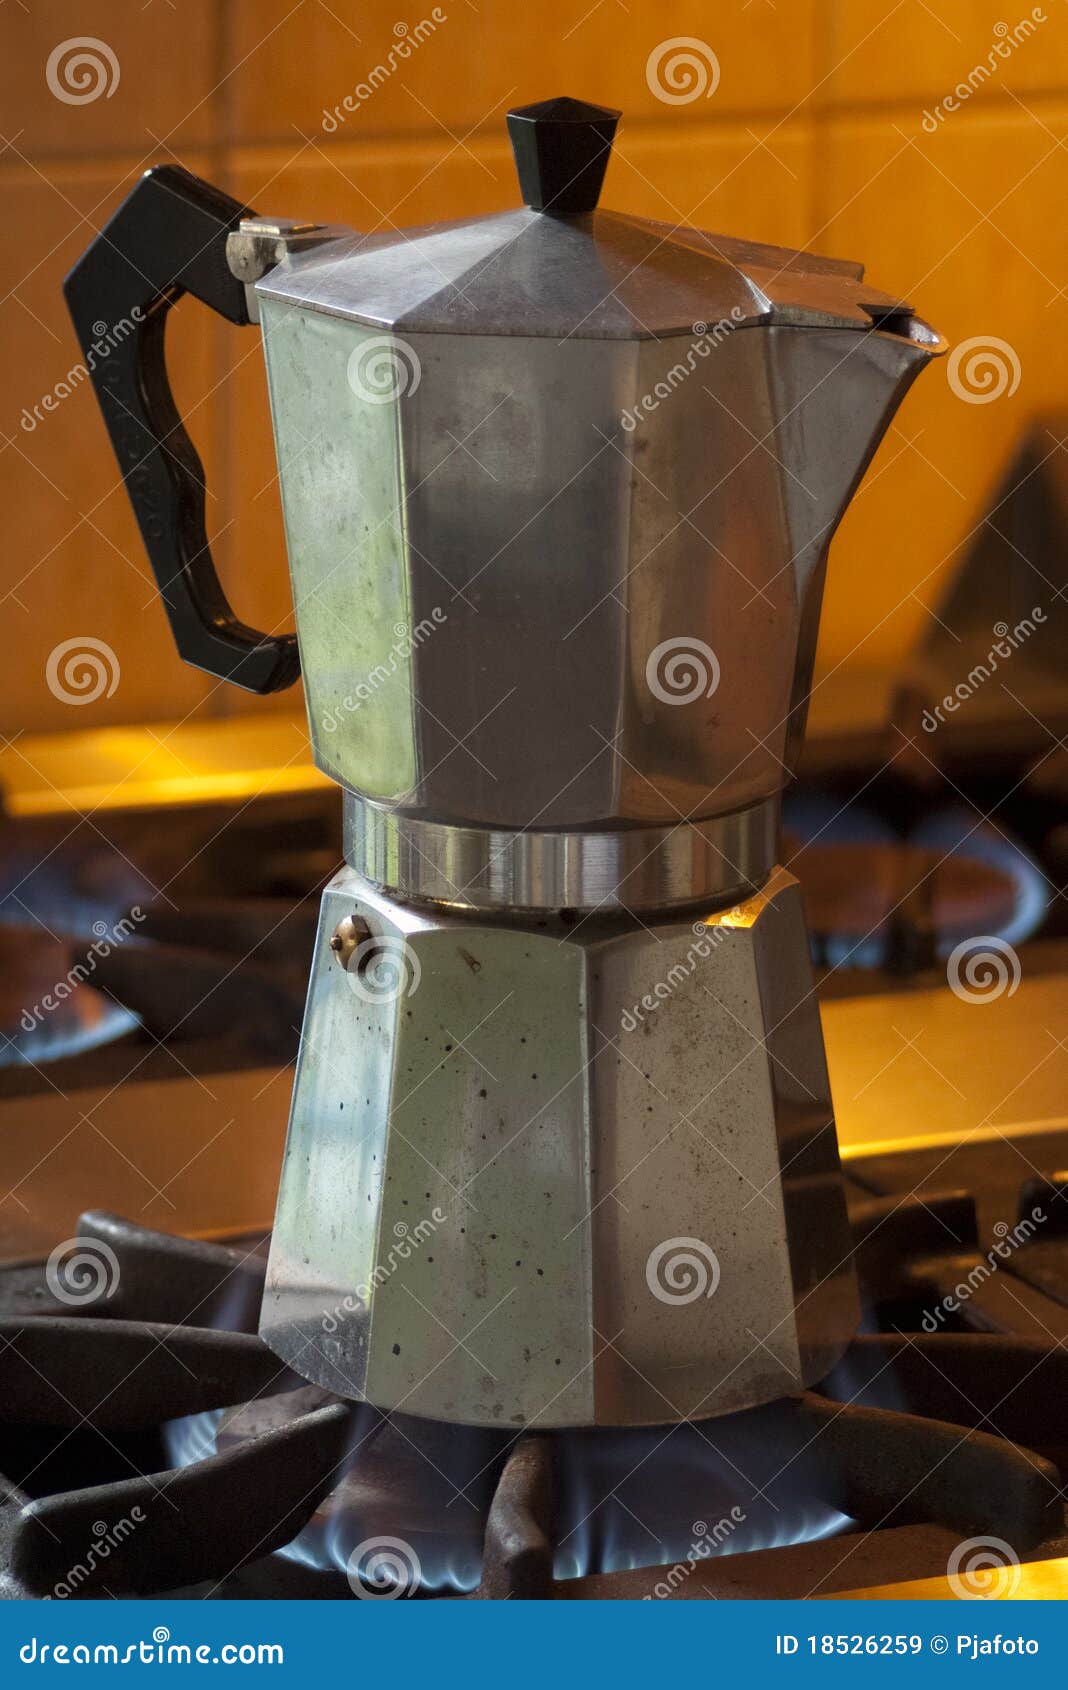 https://thumbs.dreamstime.com/z/traditional-italian-coffee-maker-18526259.jpg